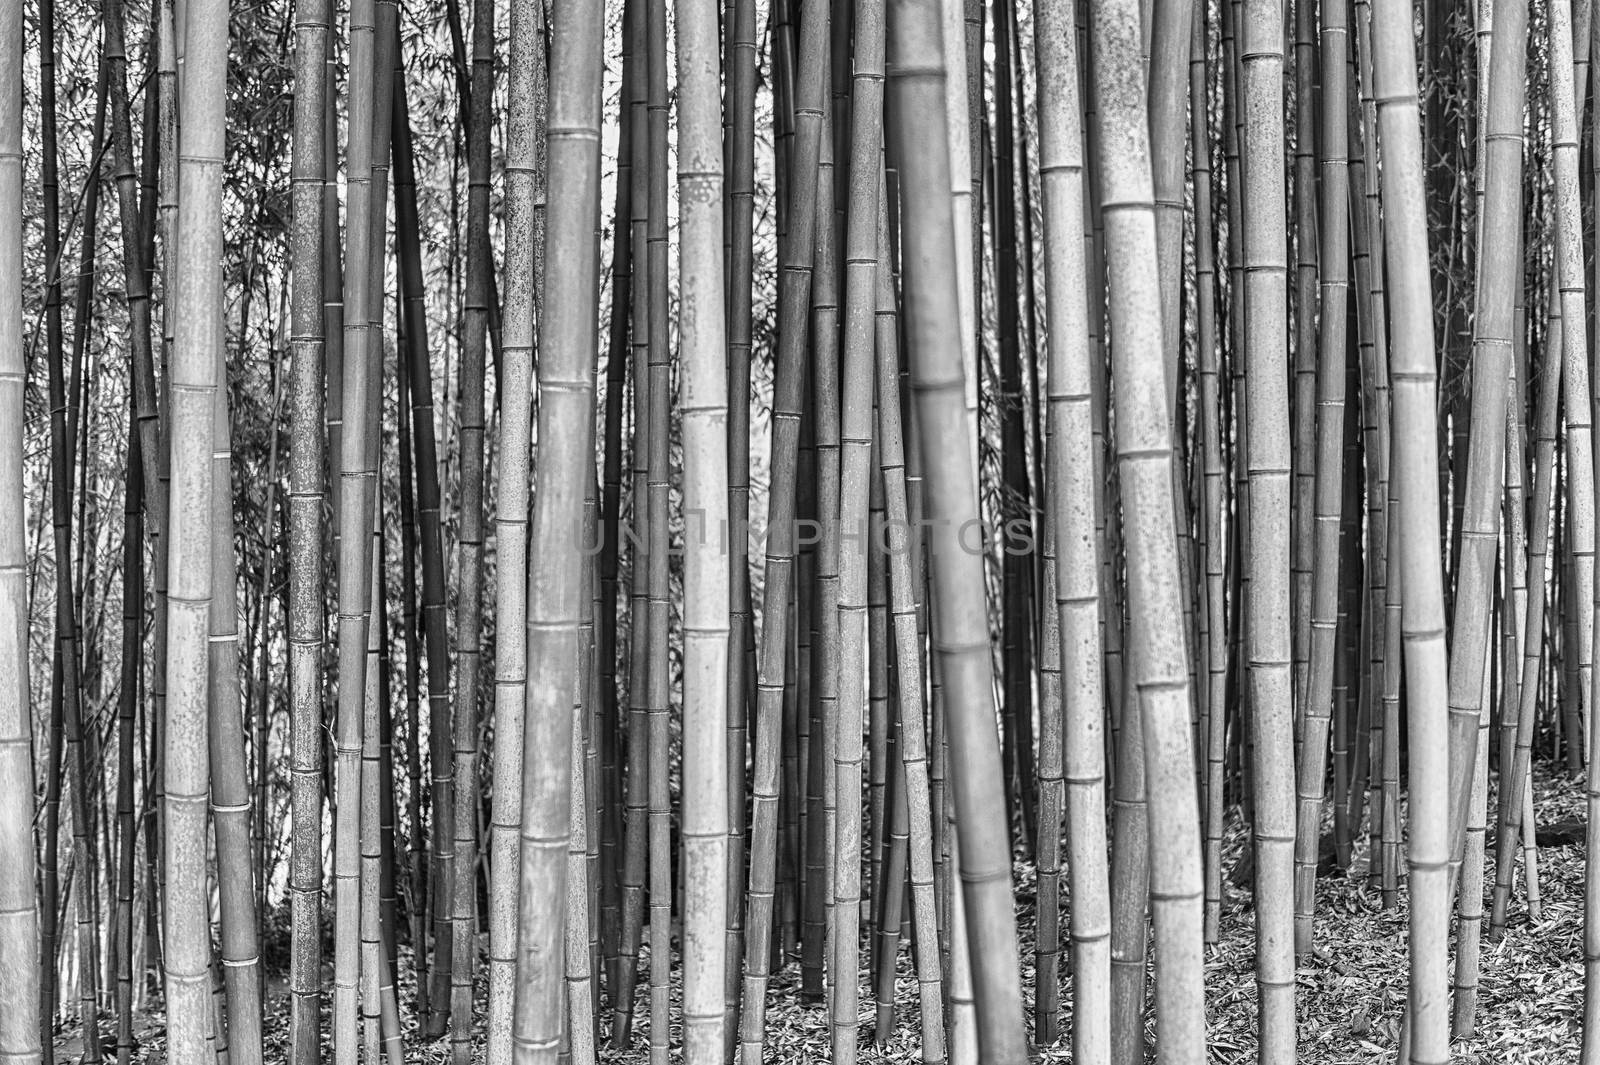 Background with foliage pattern of bamboo trees by marcorubino